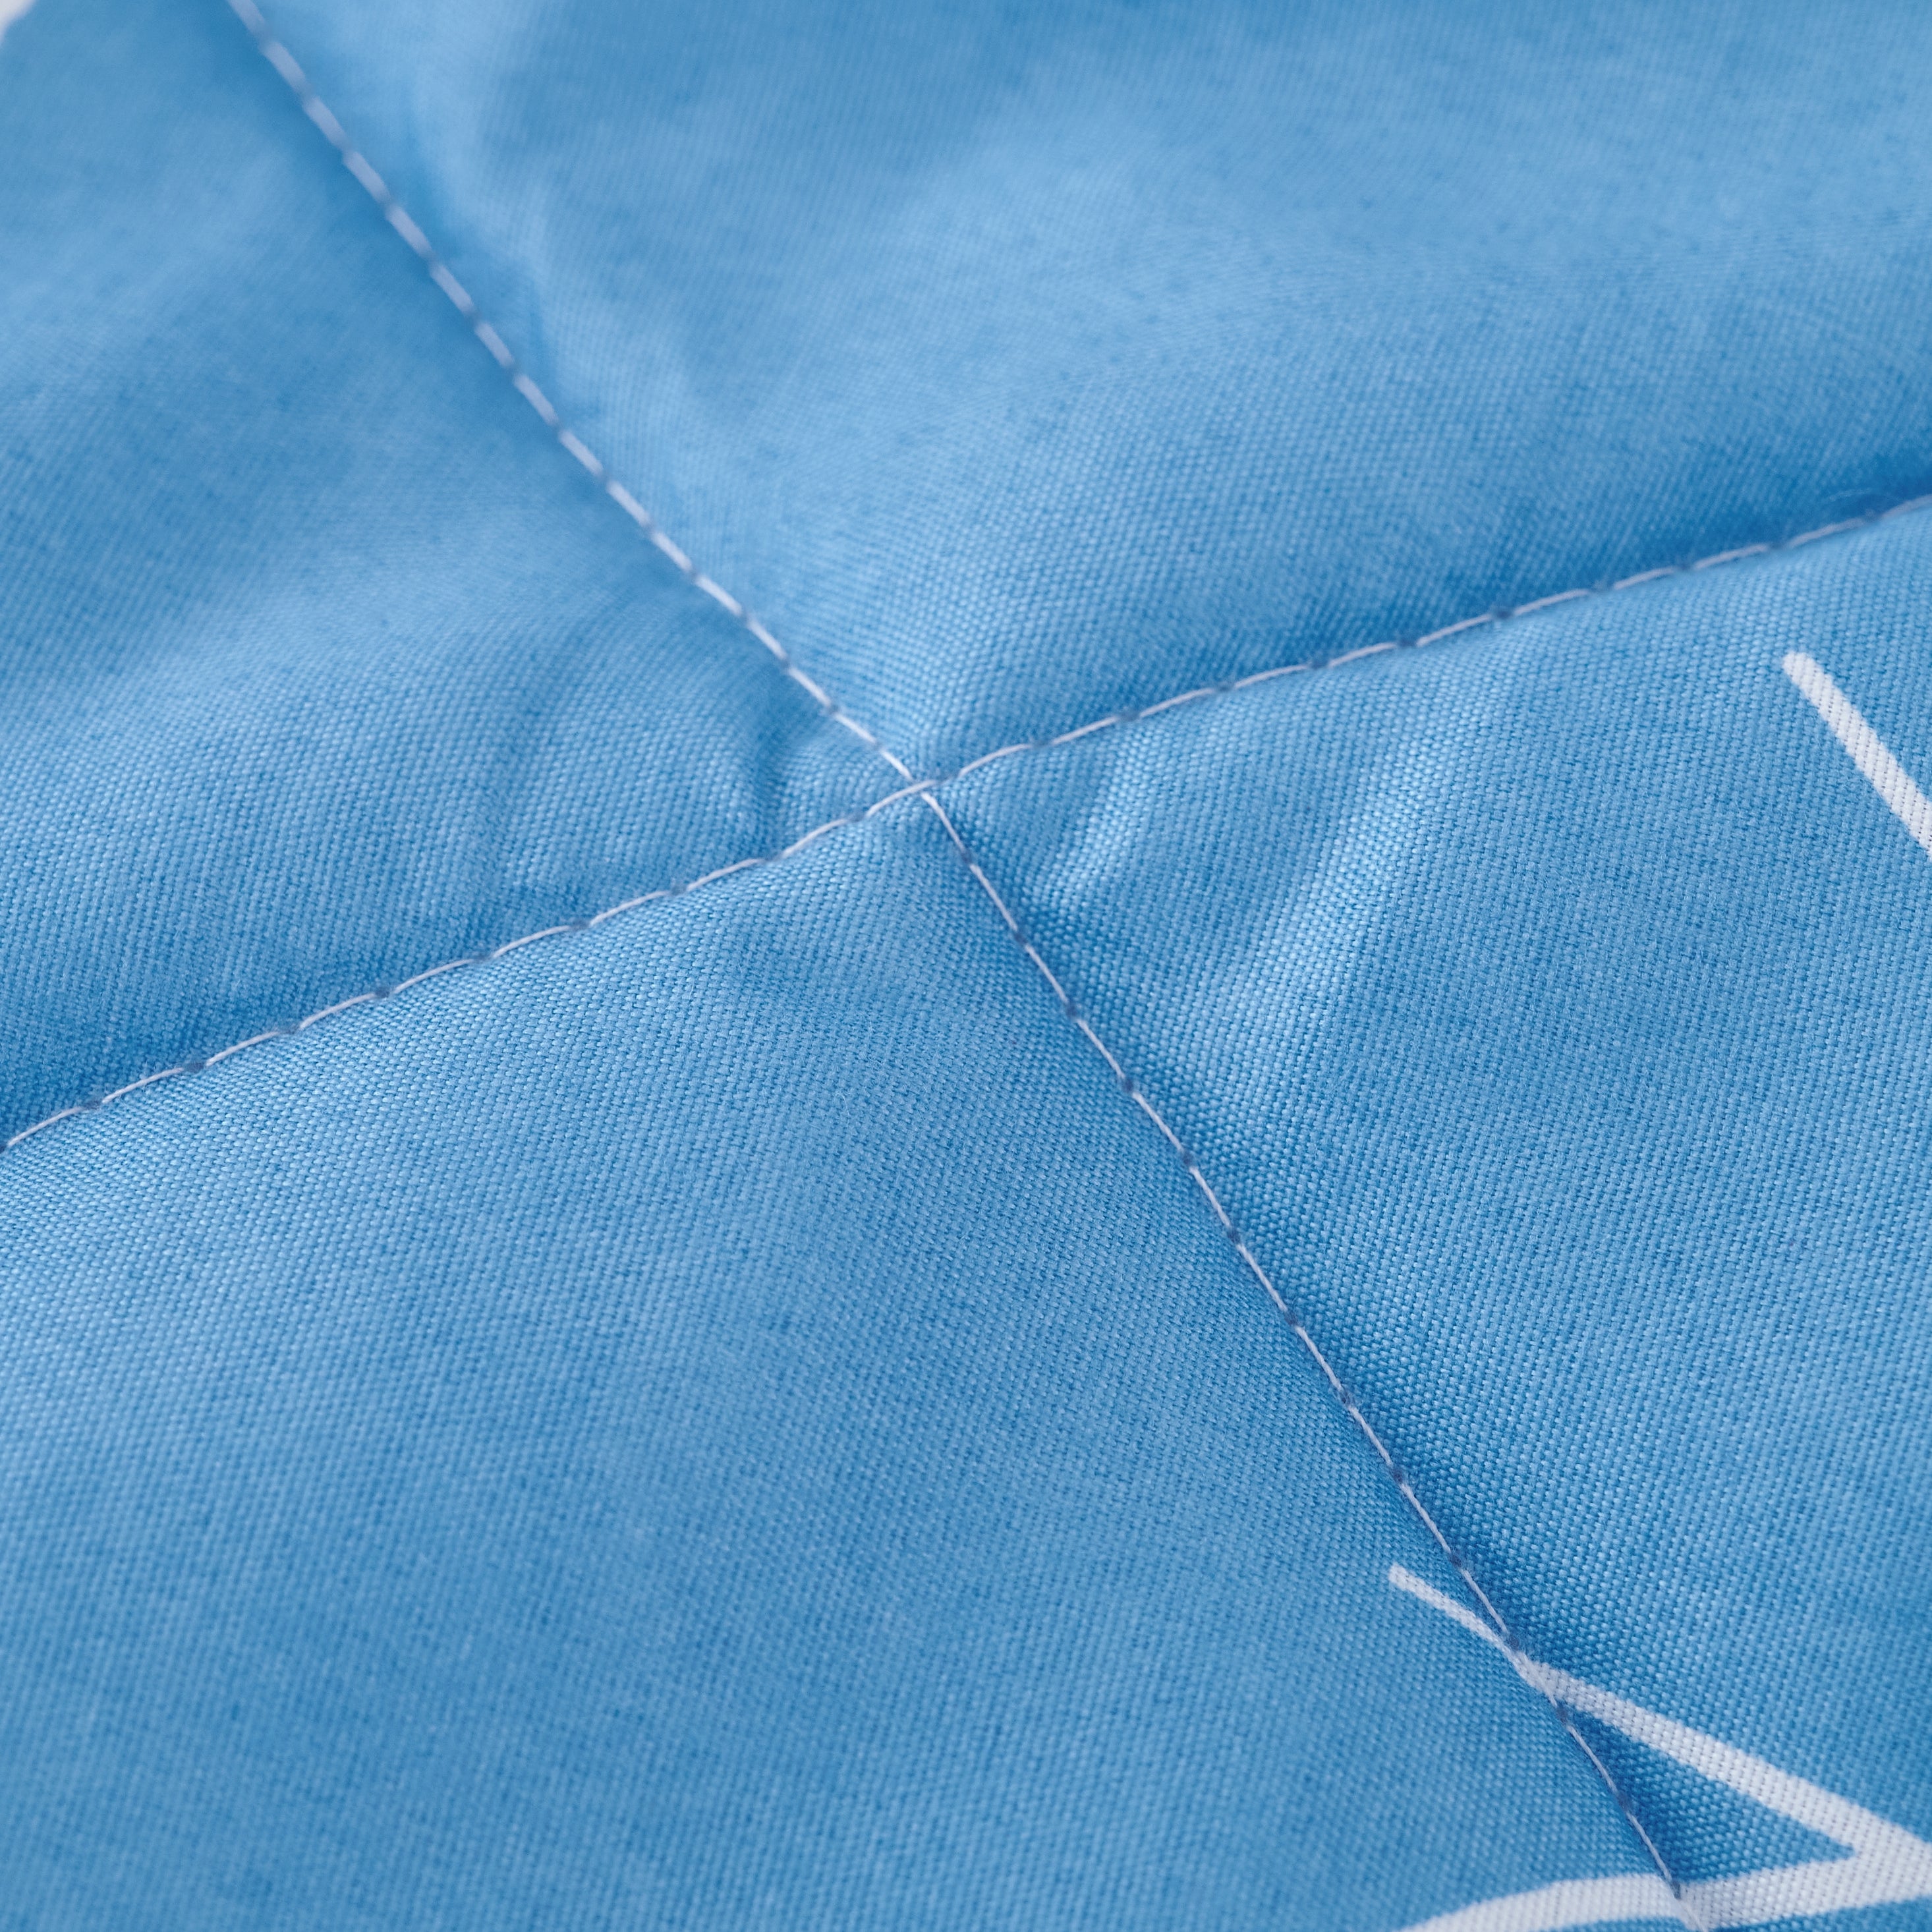 Foliage Reversible Comforter Set + Two Free Sham Pillows - Spirit Linen - Light Blue